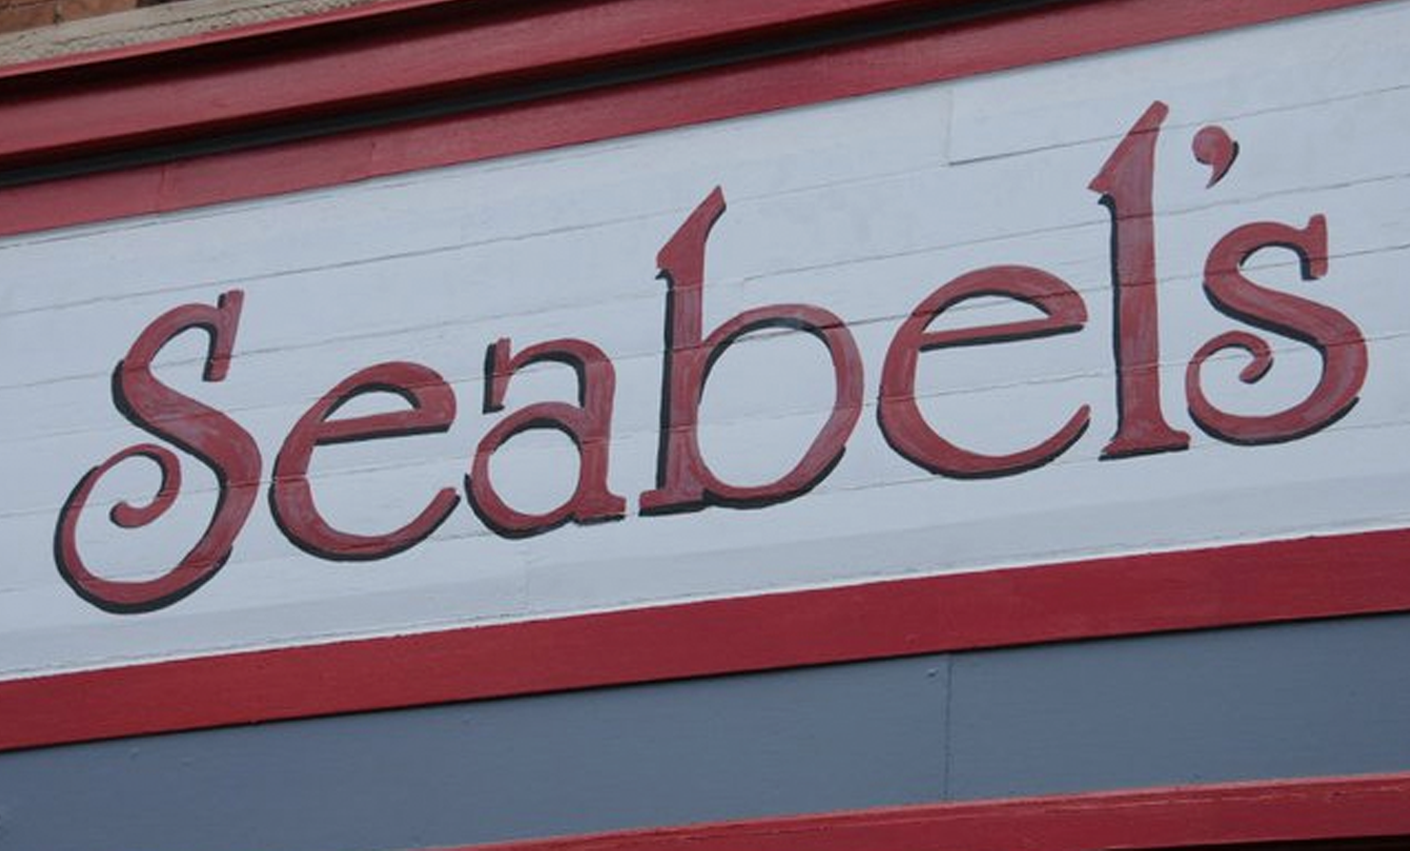 Seabel's